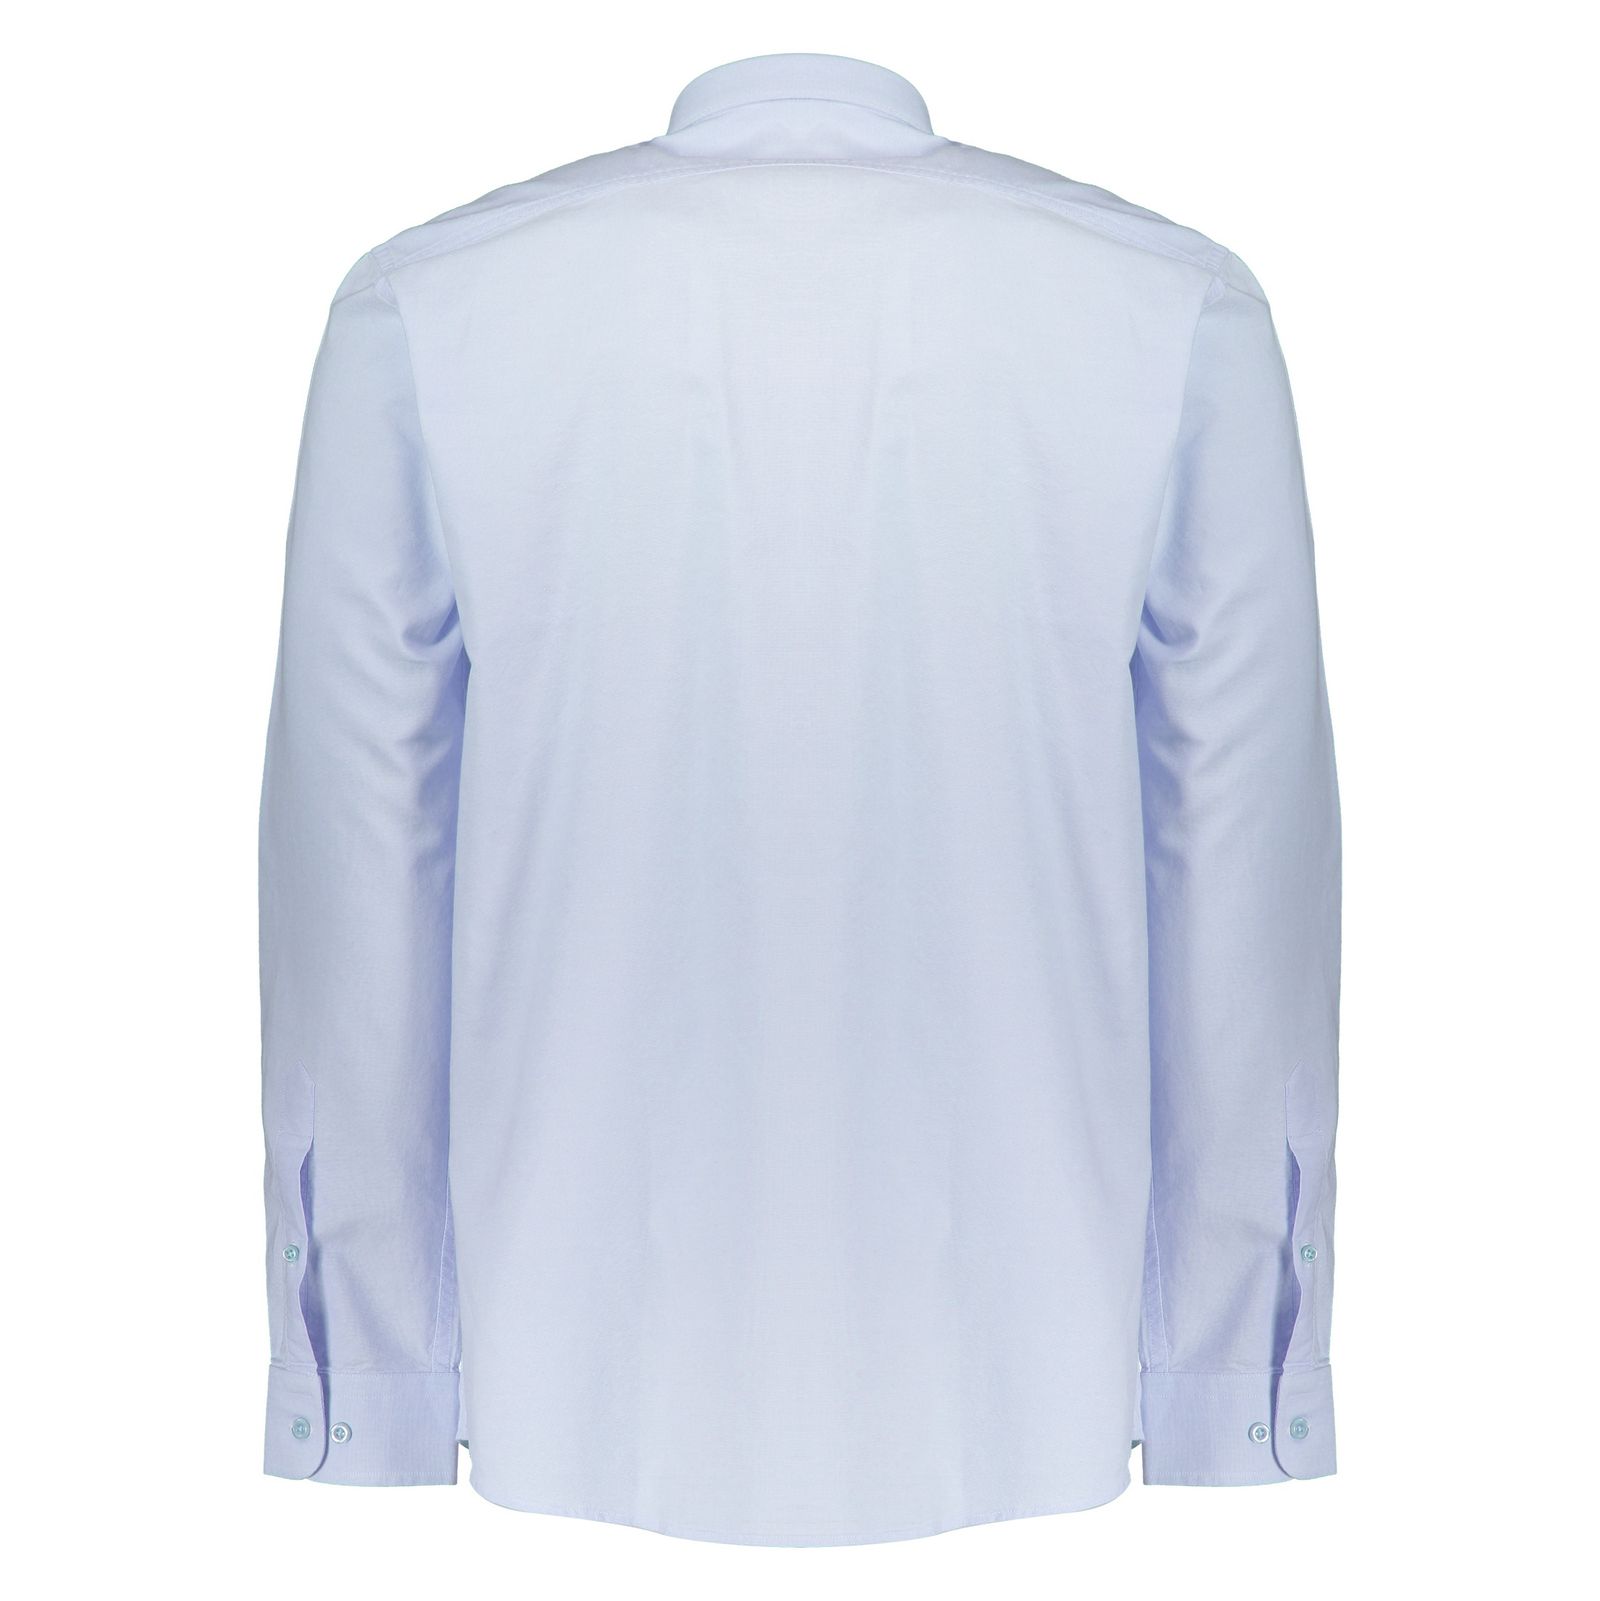 پیراهن مردانه لرد آرچر مدل 200114750 - آبی روشن - 3